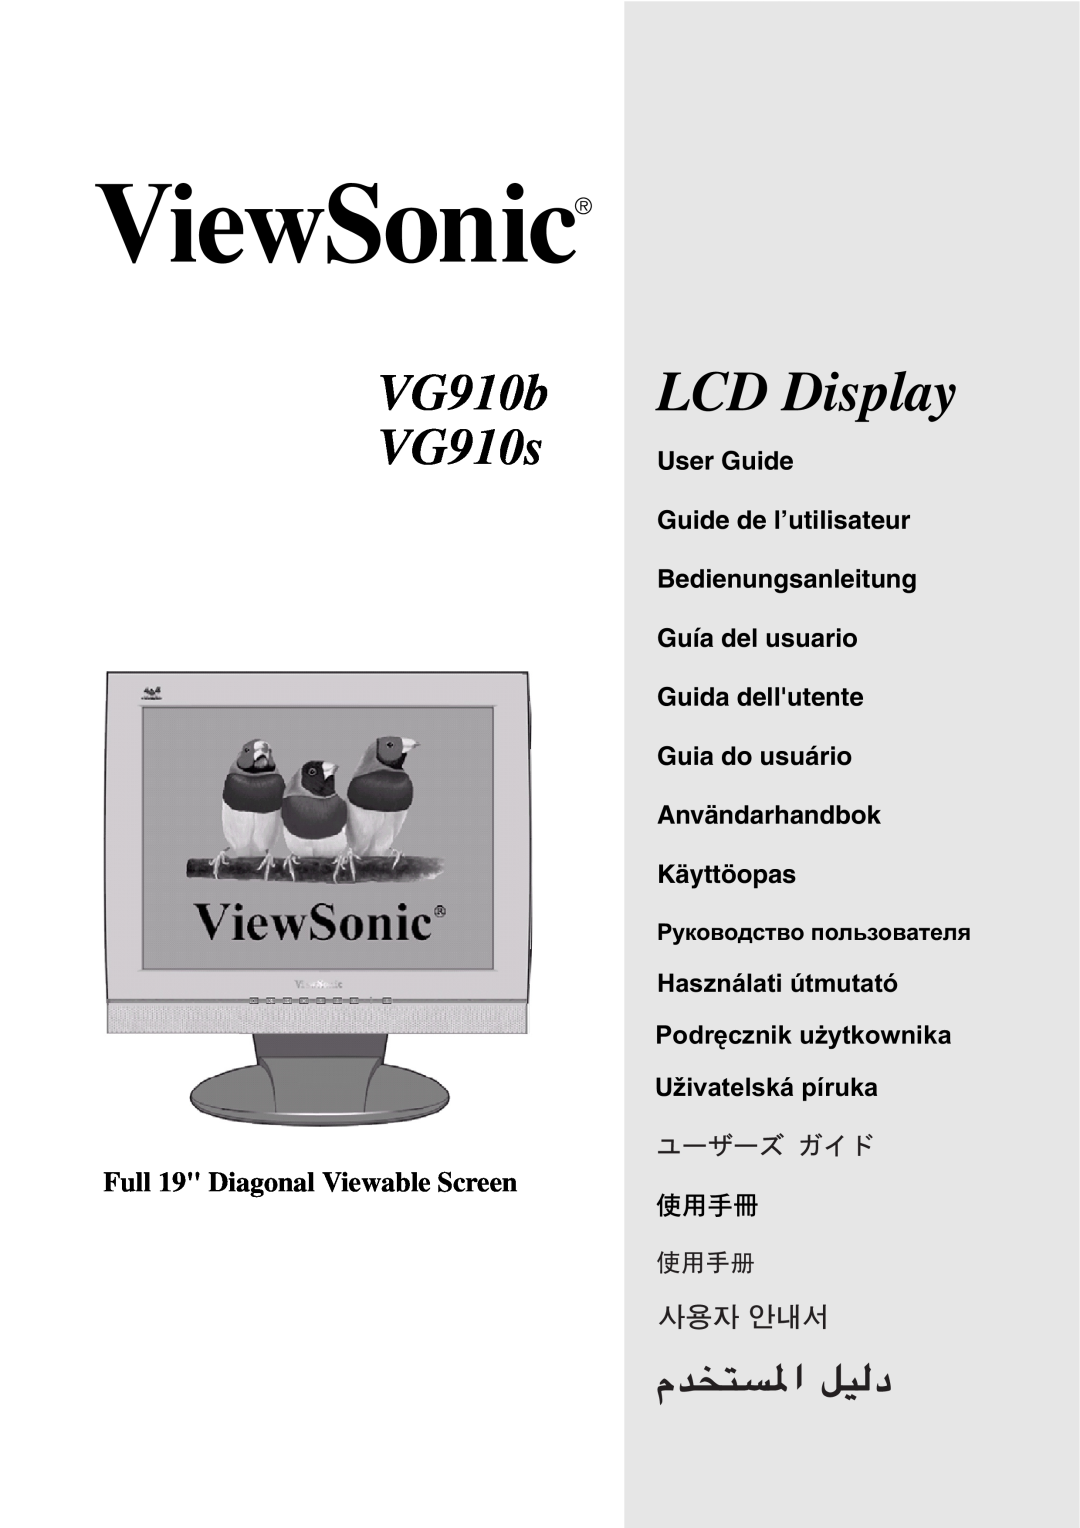 ViewSonic VG910B manual User Guide Guide de l’utilisateur Bedienungsanleitung, Käyttöopas, LCD Display, VG910b VG910s 